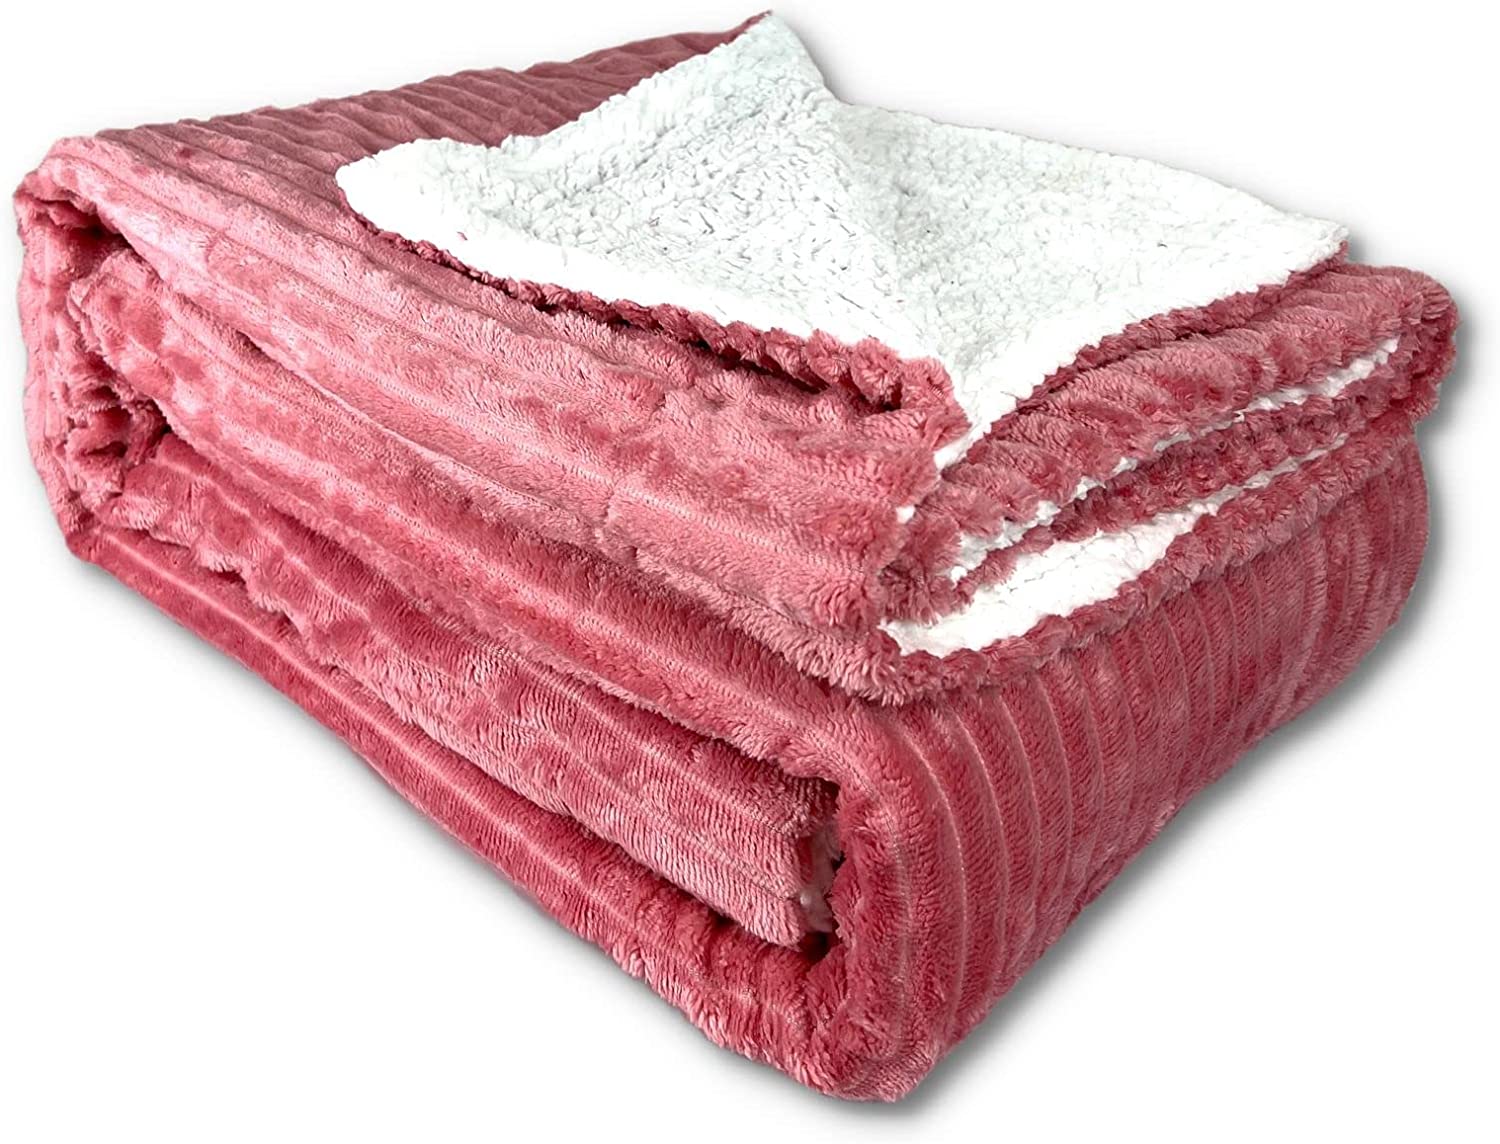 FABRIK Collection Sherpa Bed Blanket King Size Twin Plush Throw Blanket Fleece Reversible Flannel Blanket - Warm and Plush Travel Blanket for Bed Sofa Travel, Pink